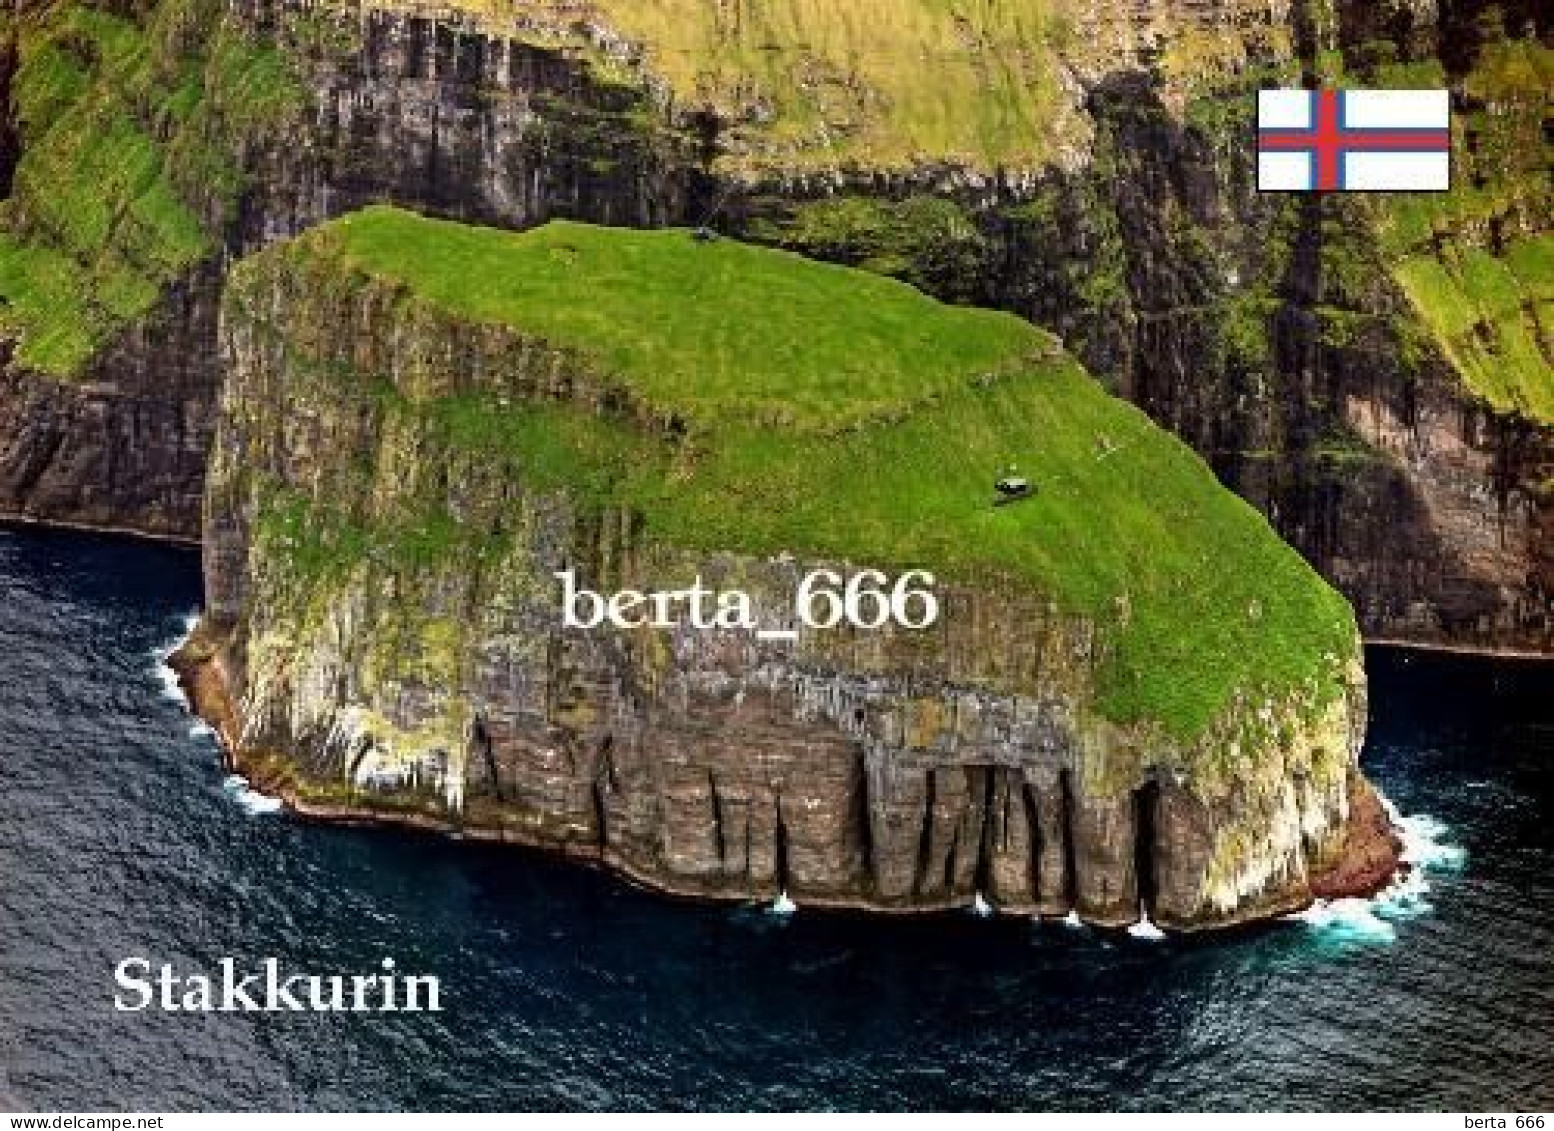 Faroe Islands Stakkurin Seastack New Postcard - Féroé (Iles)